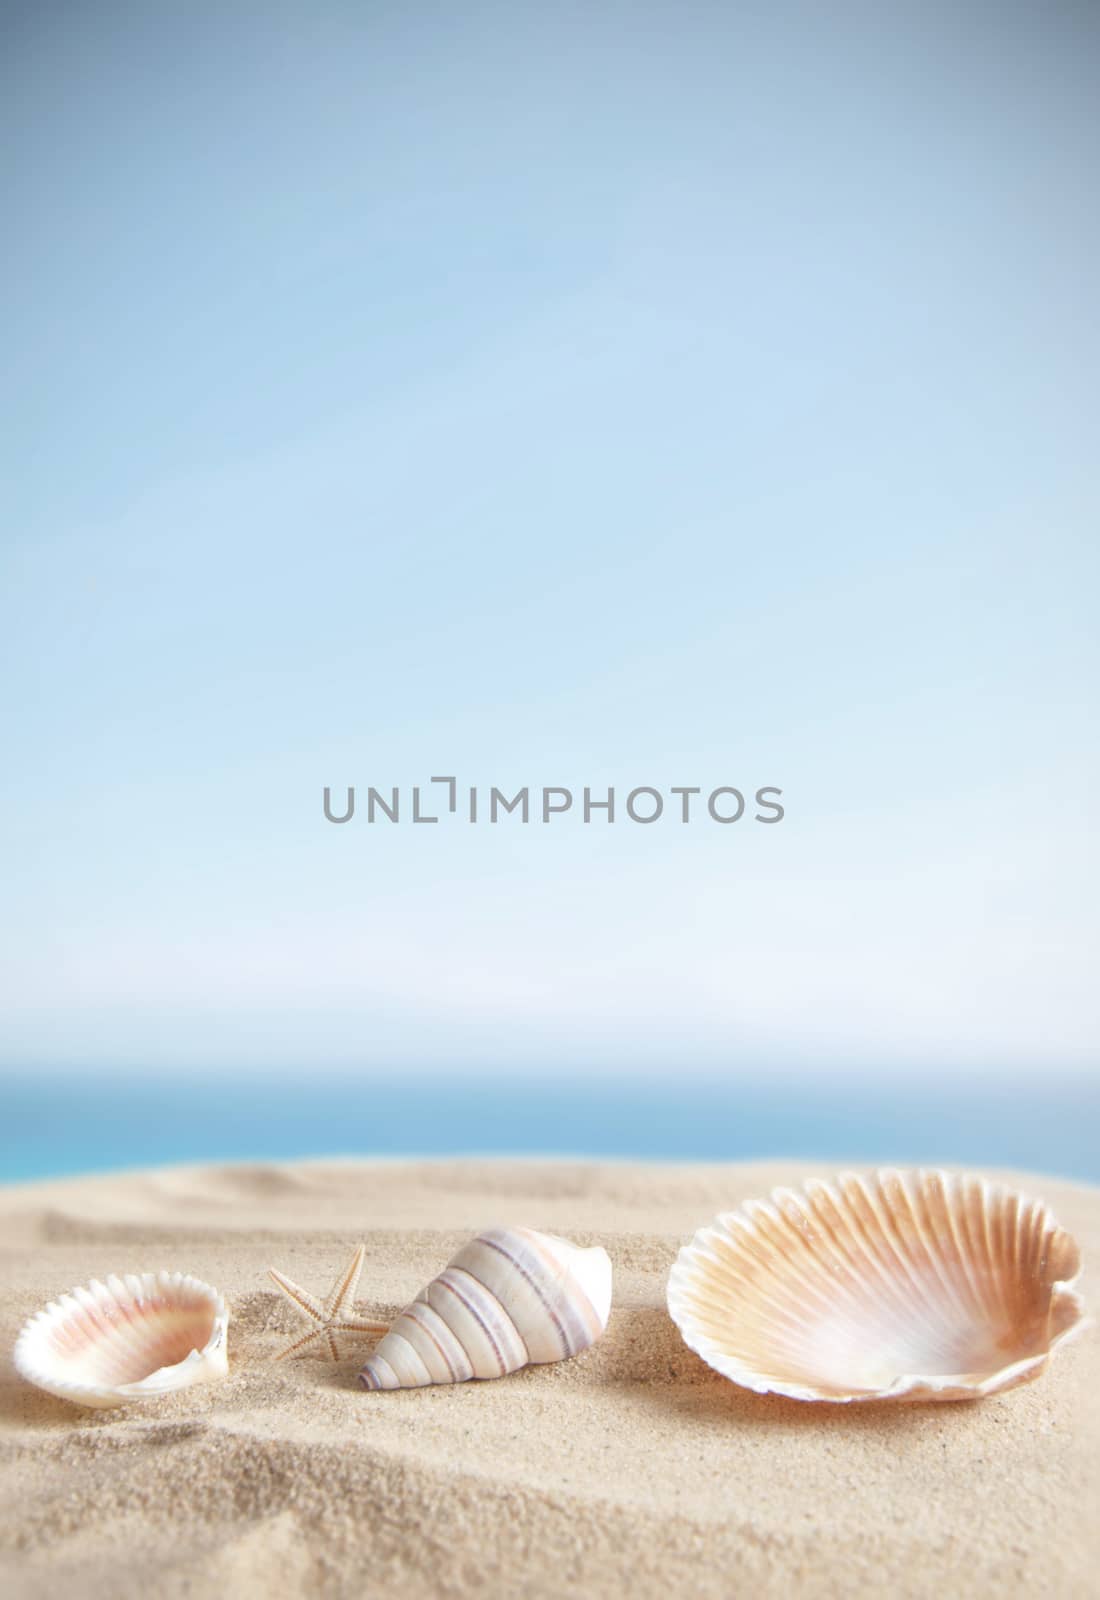 Sea shells on sand background by unikpix